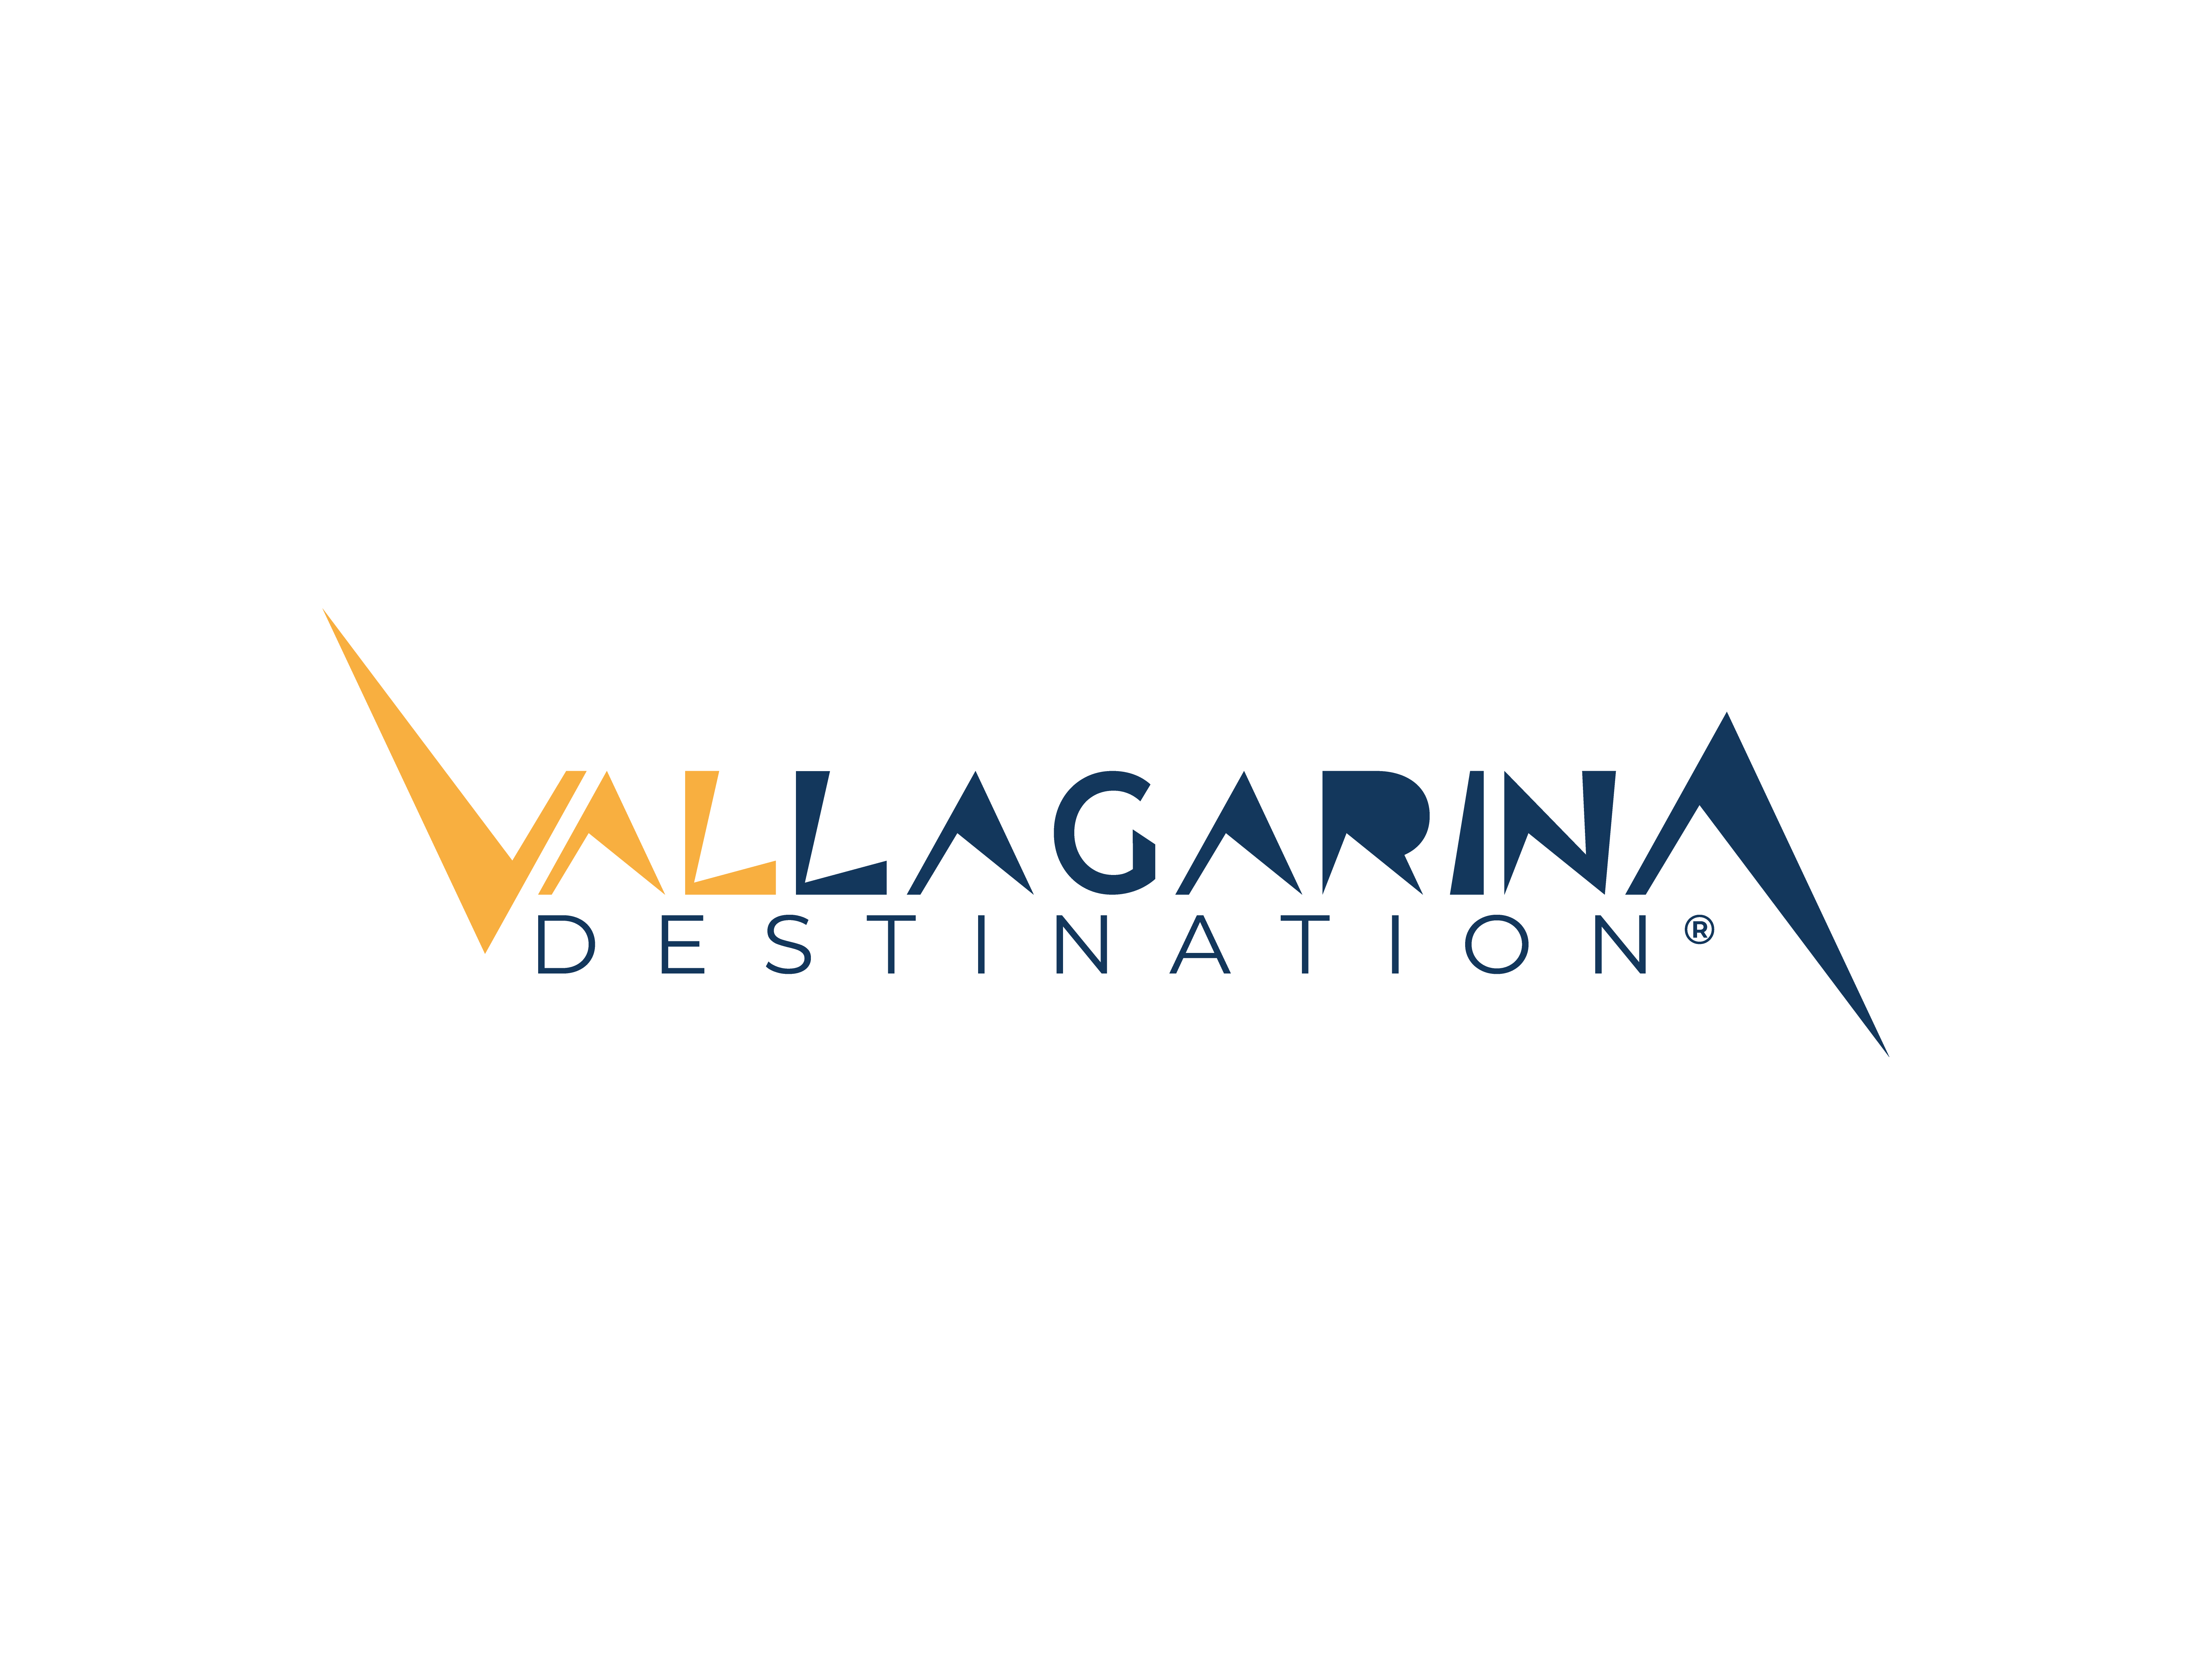 Vallagarina Destination